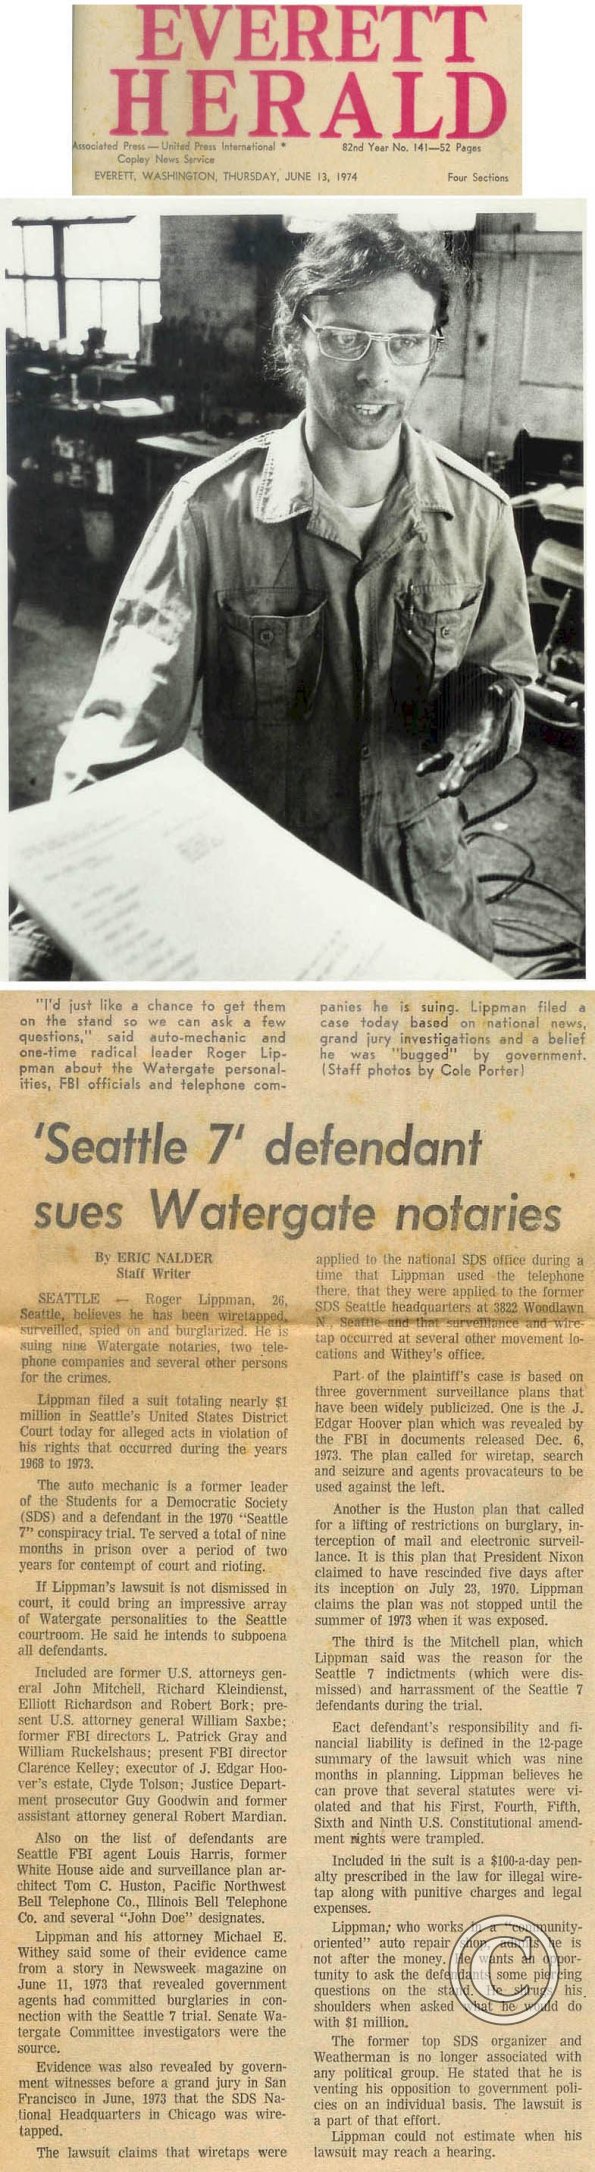 Wiretap lawsuit article by Eric Nalder, June 1974